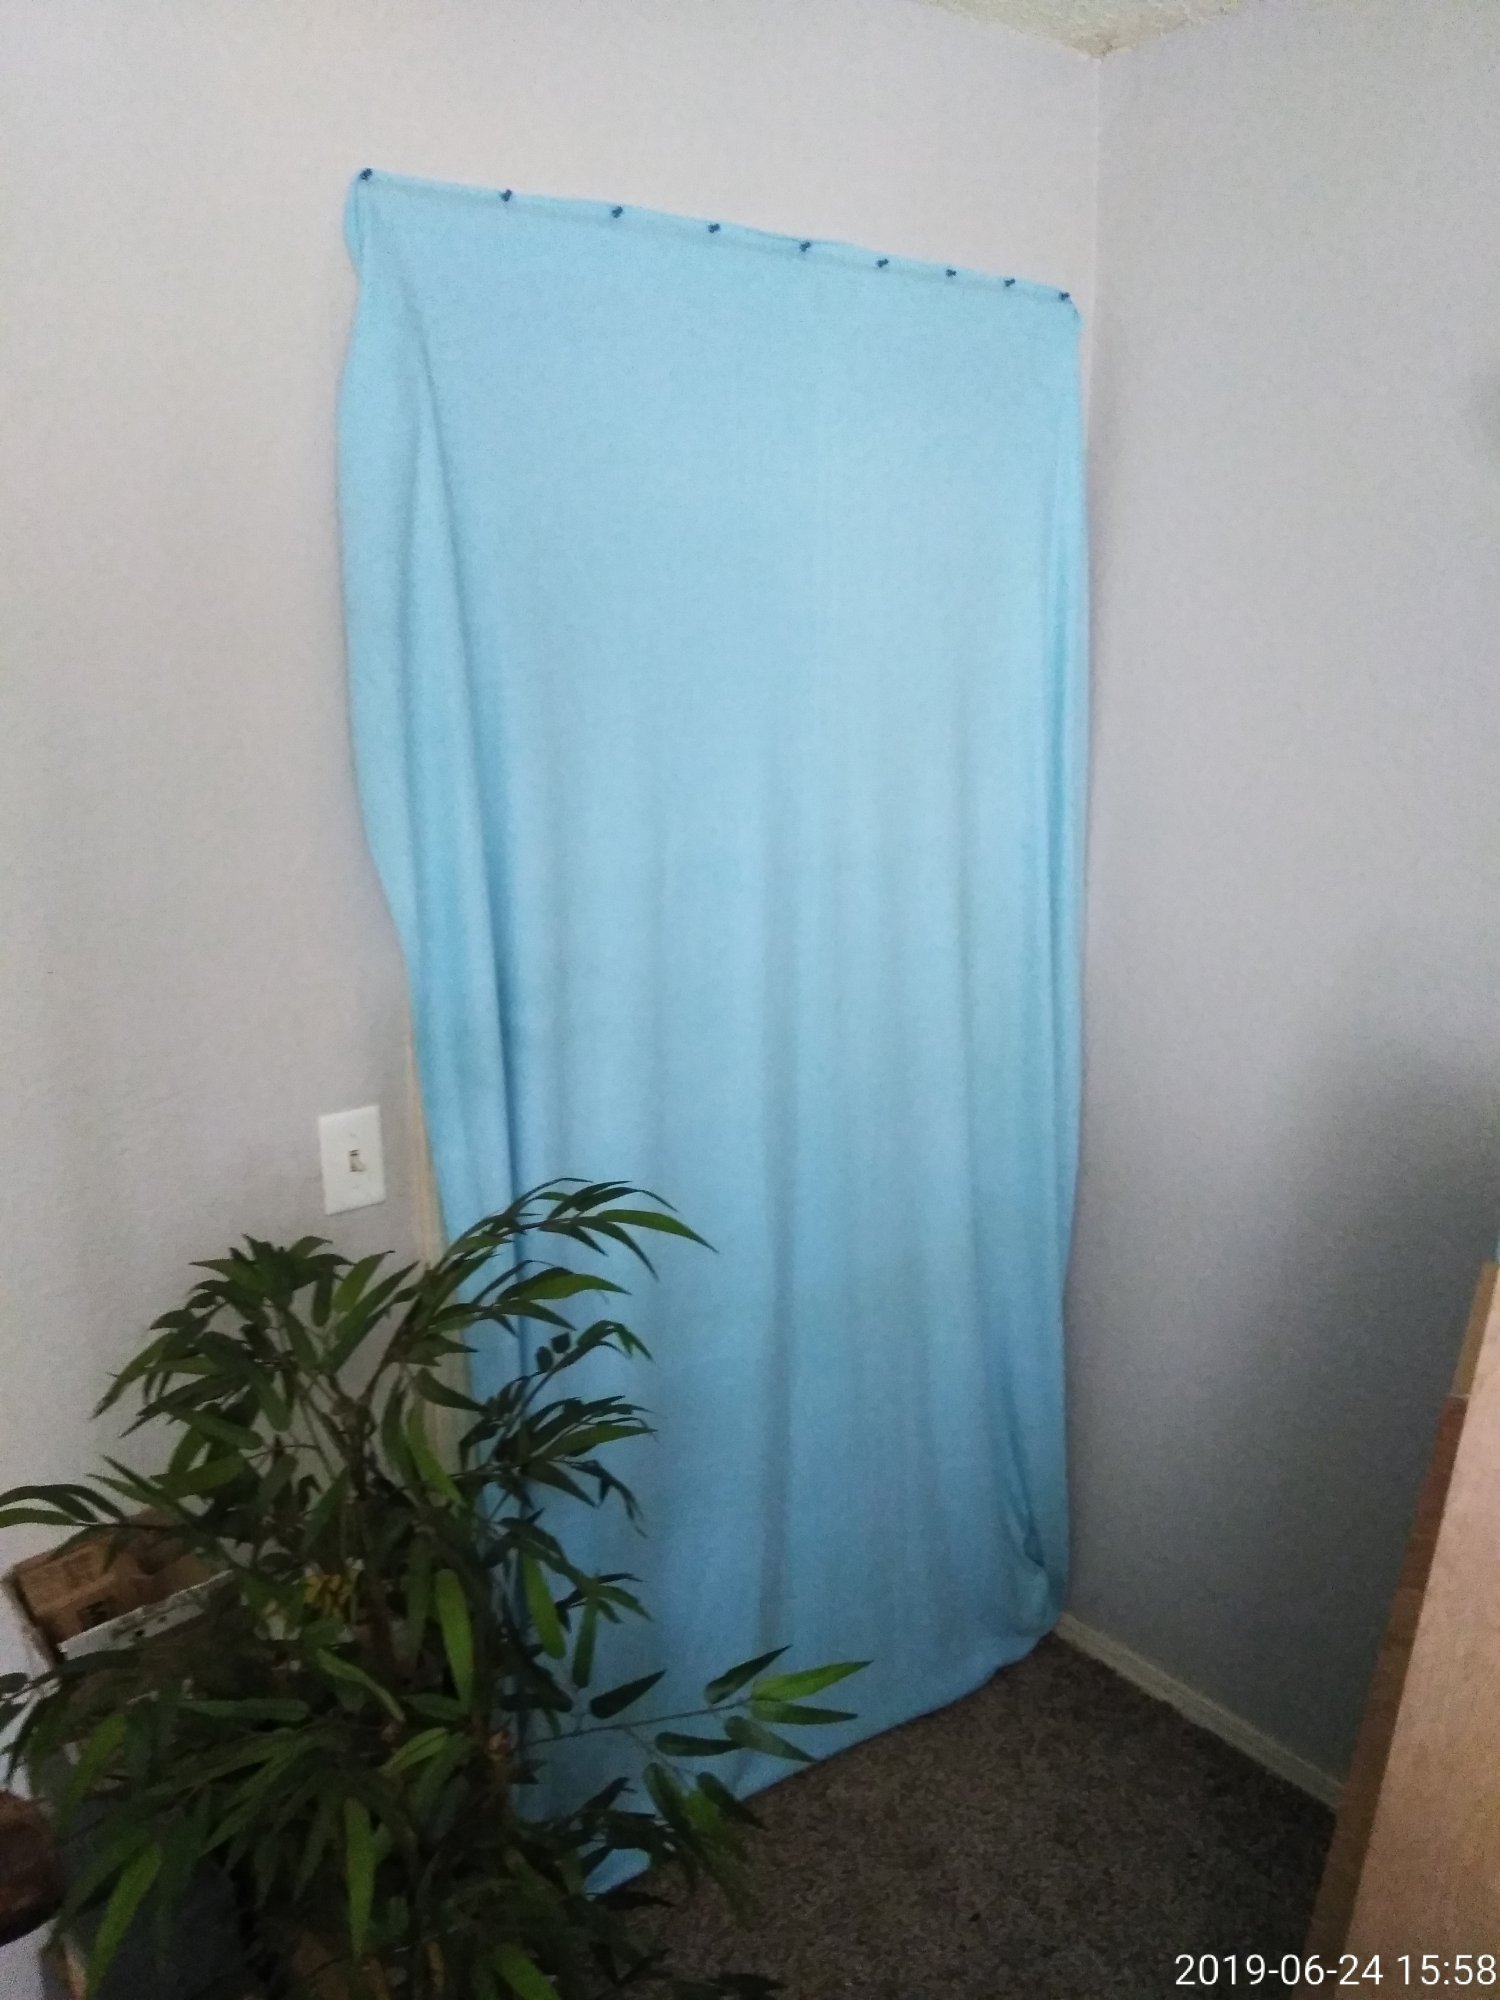 Curtain over closet opening